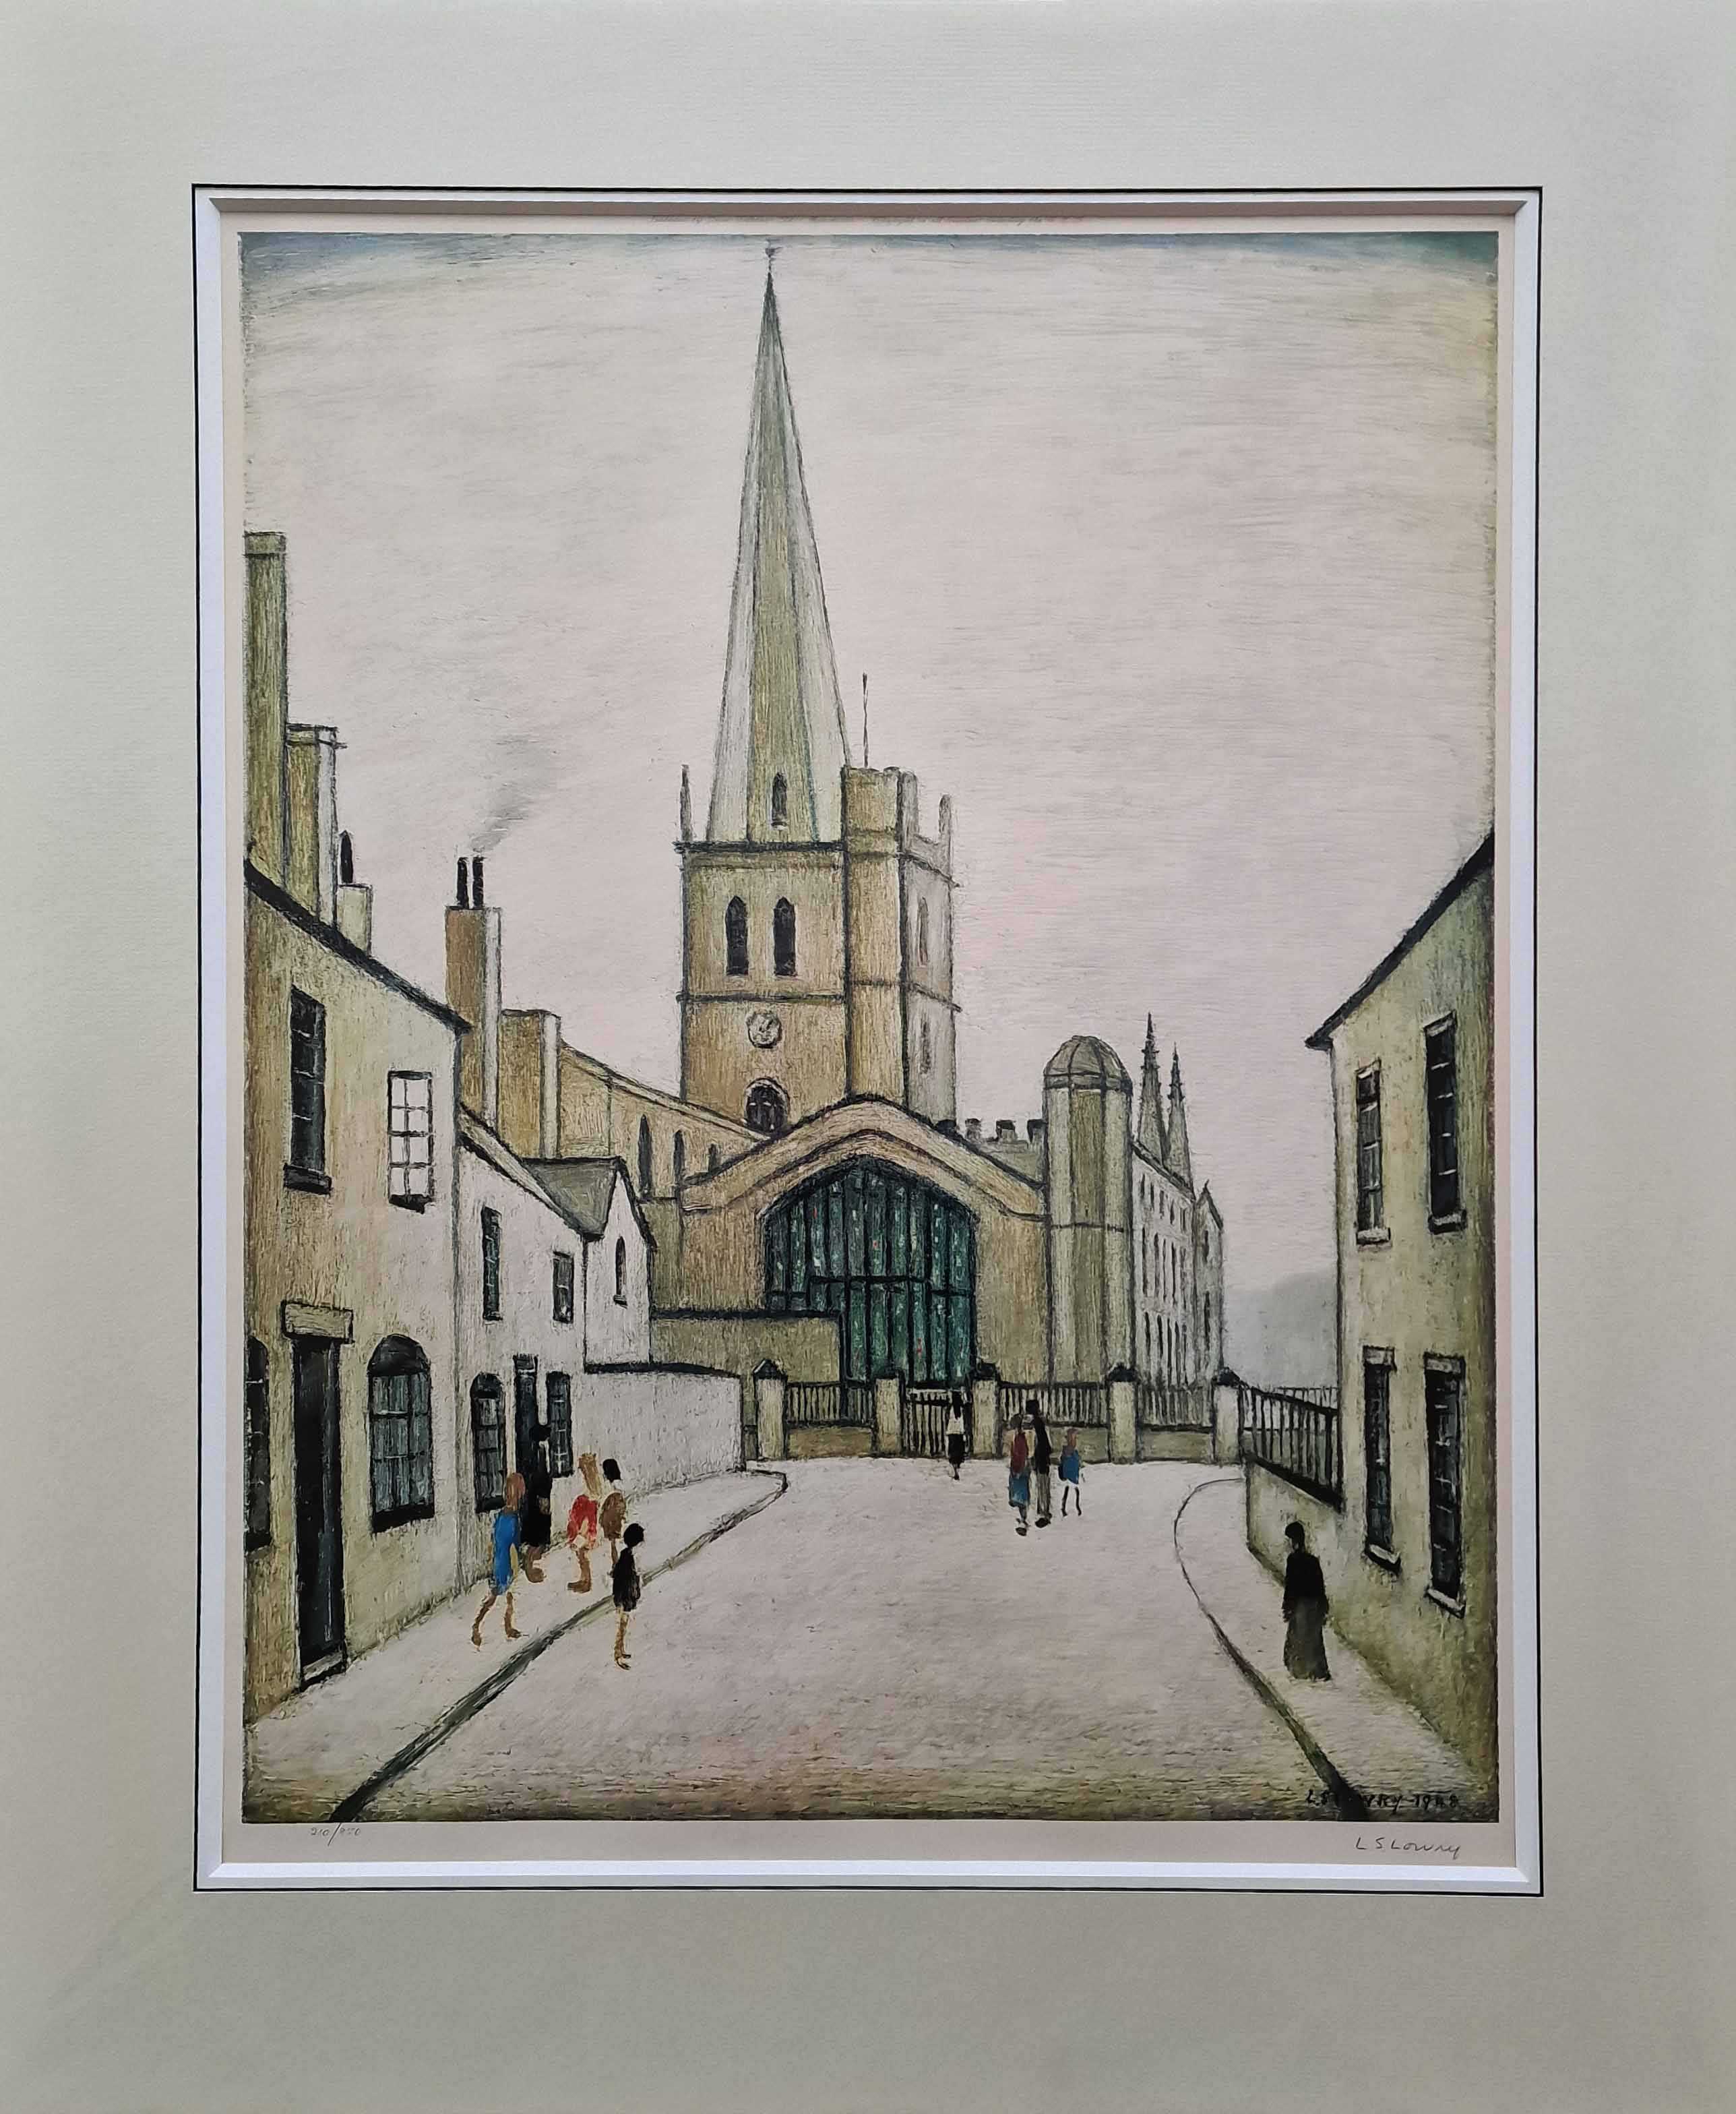 lowry, Burford church, signed print, lslowry